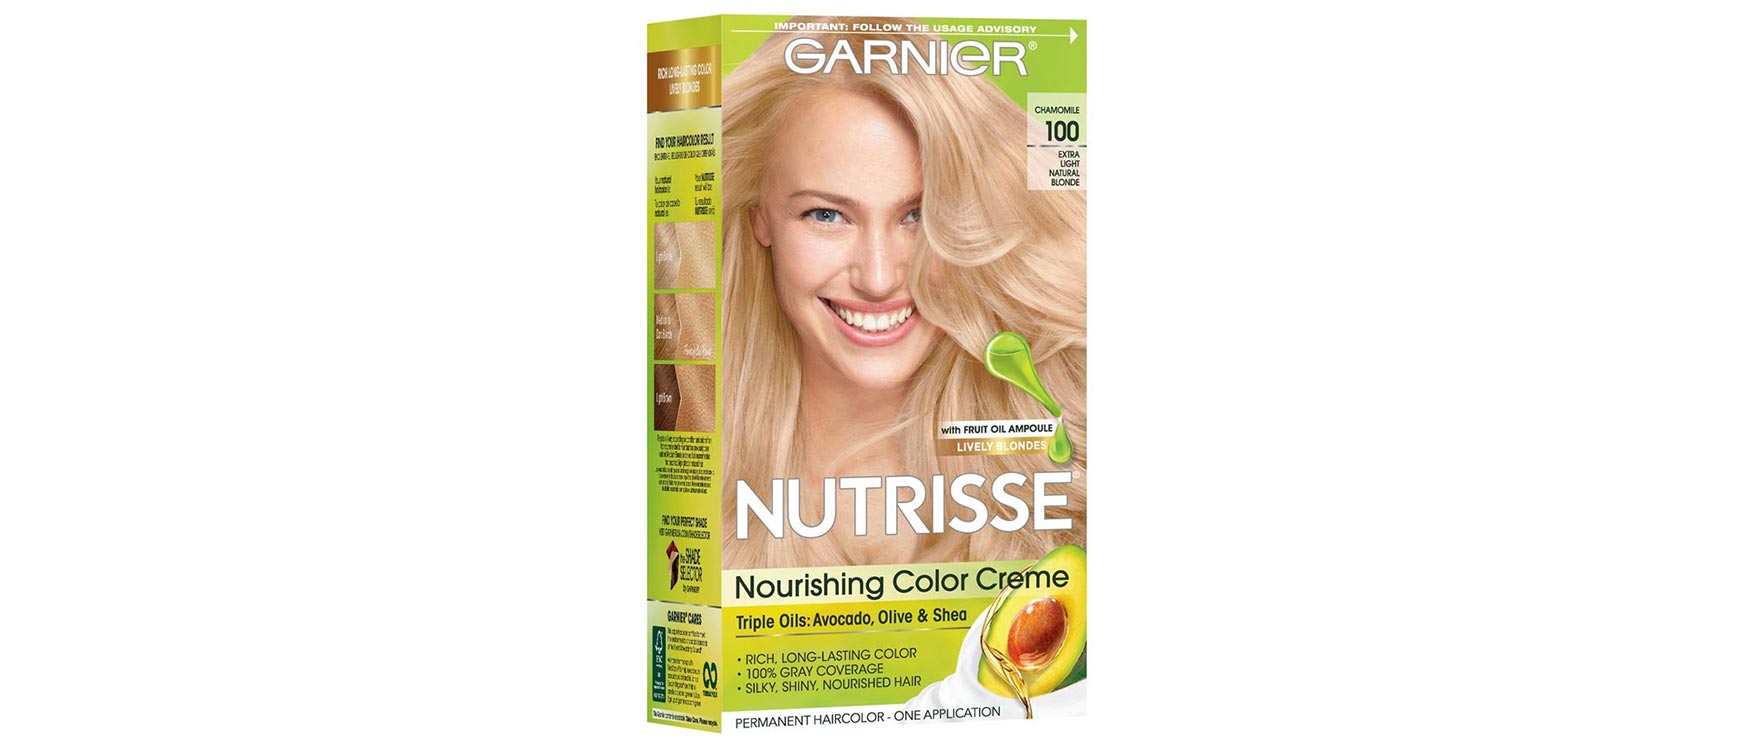 2. Garnier Nutrisse Nourshing Color Crème